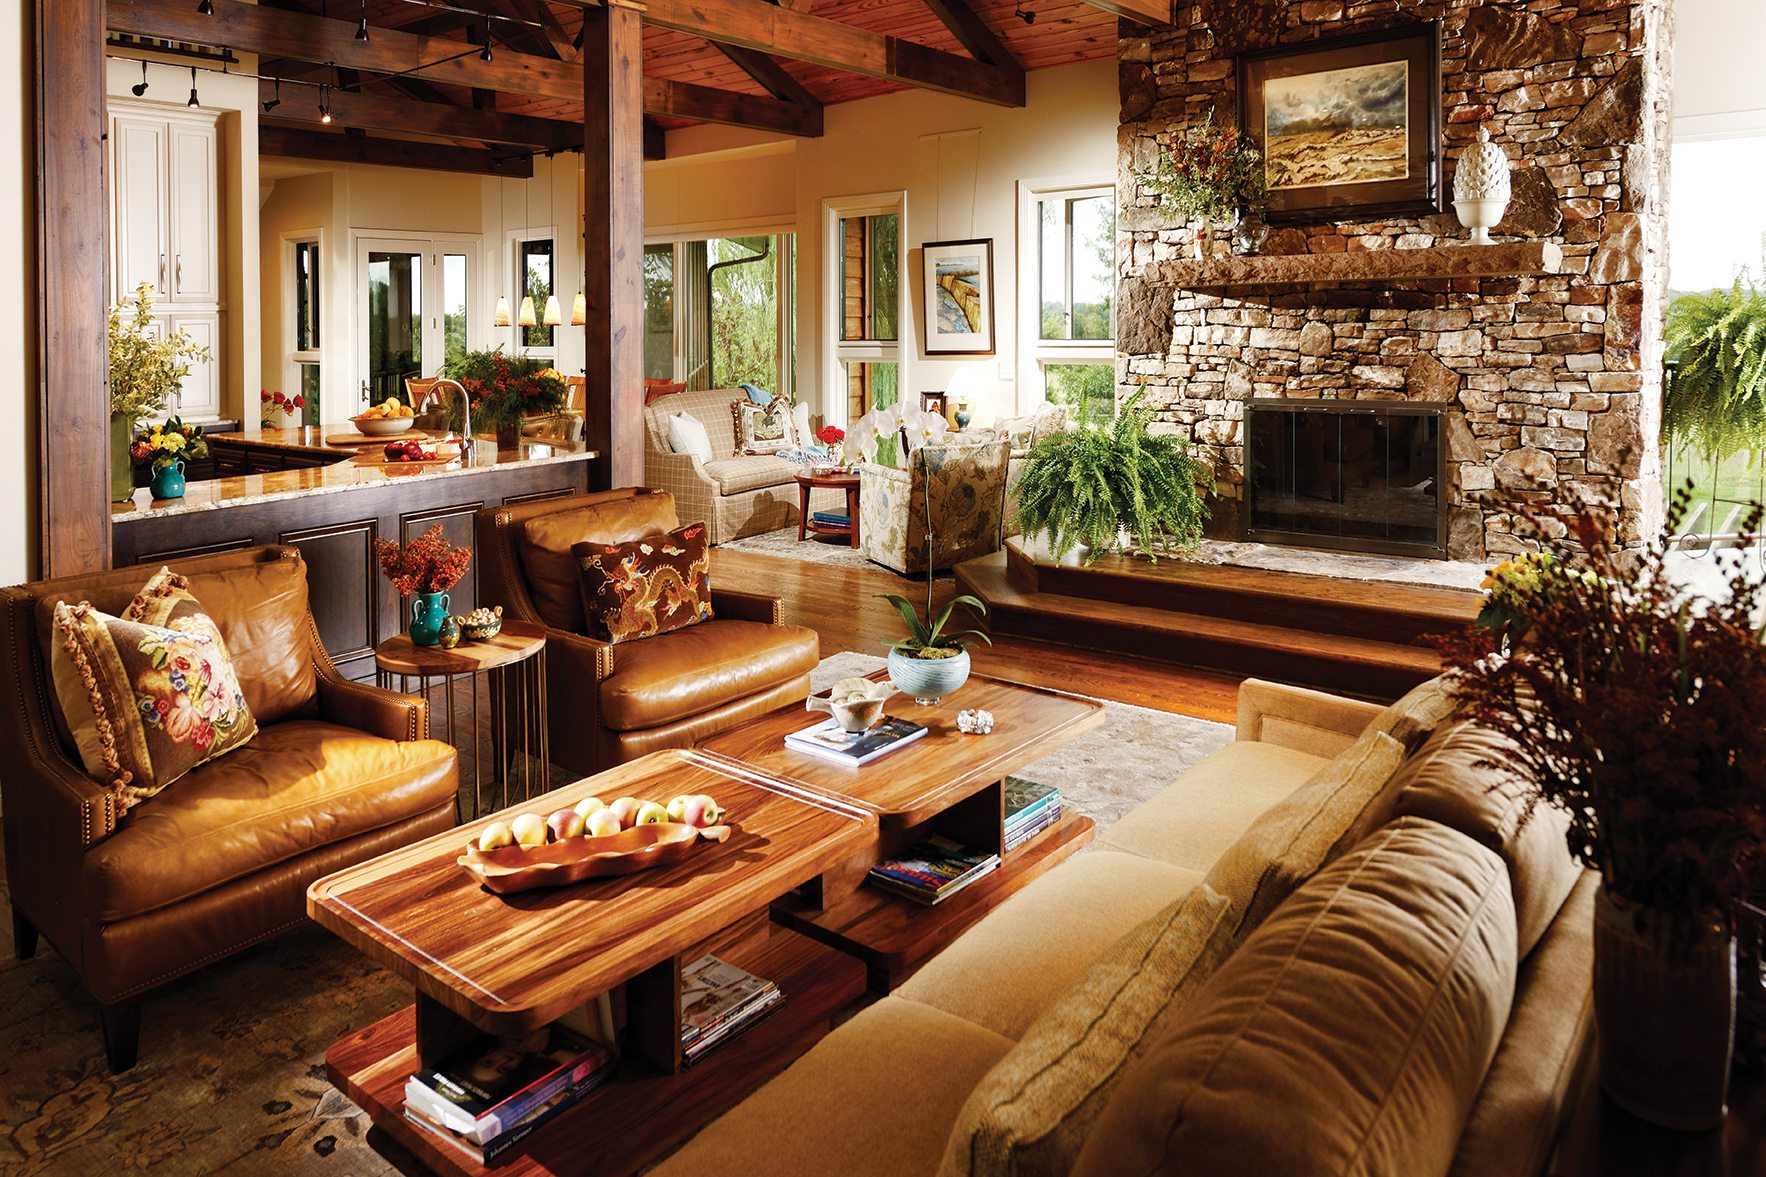 417 Home Design Awards 2015 - Whole Home Winner: Living Room